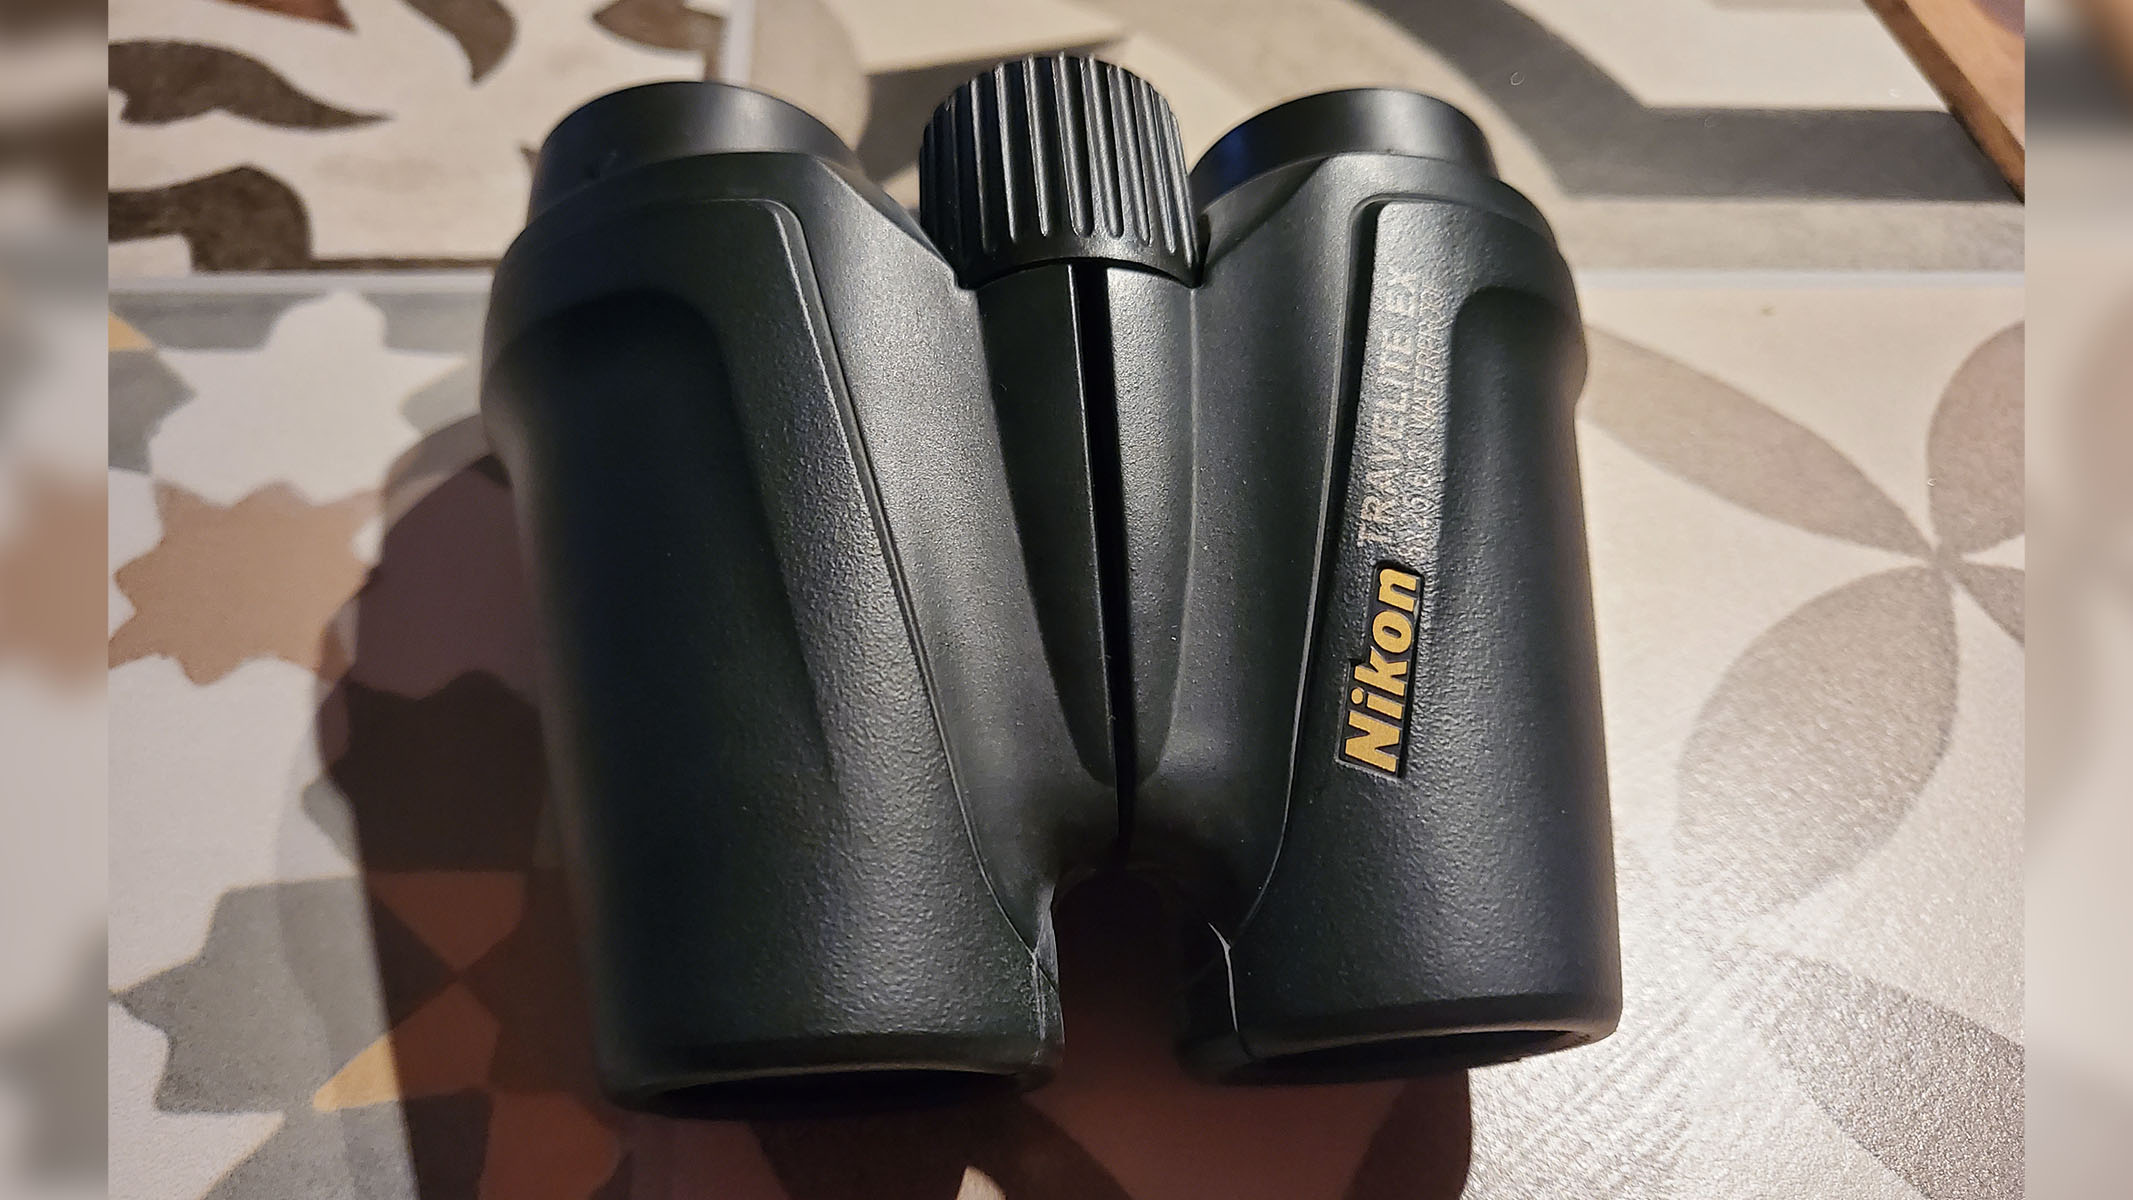 Nikon Travelite EX 8x25 binocular review